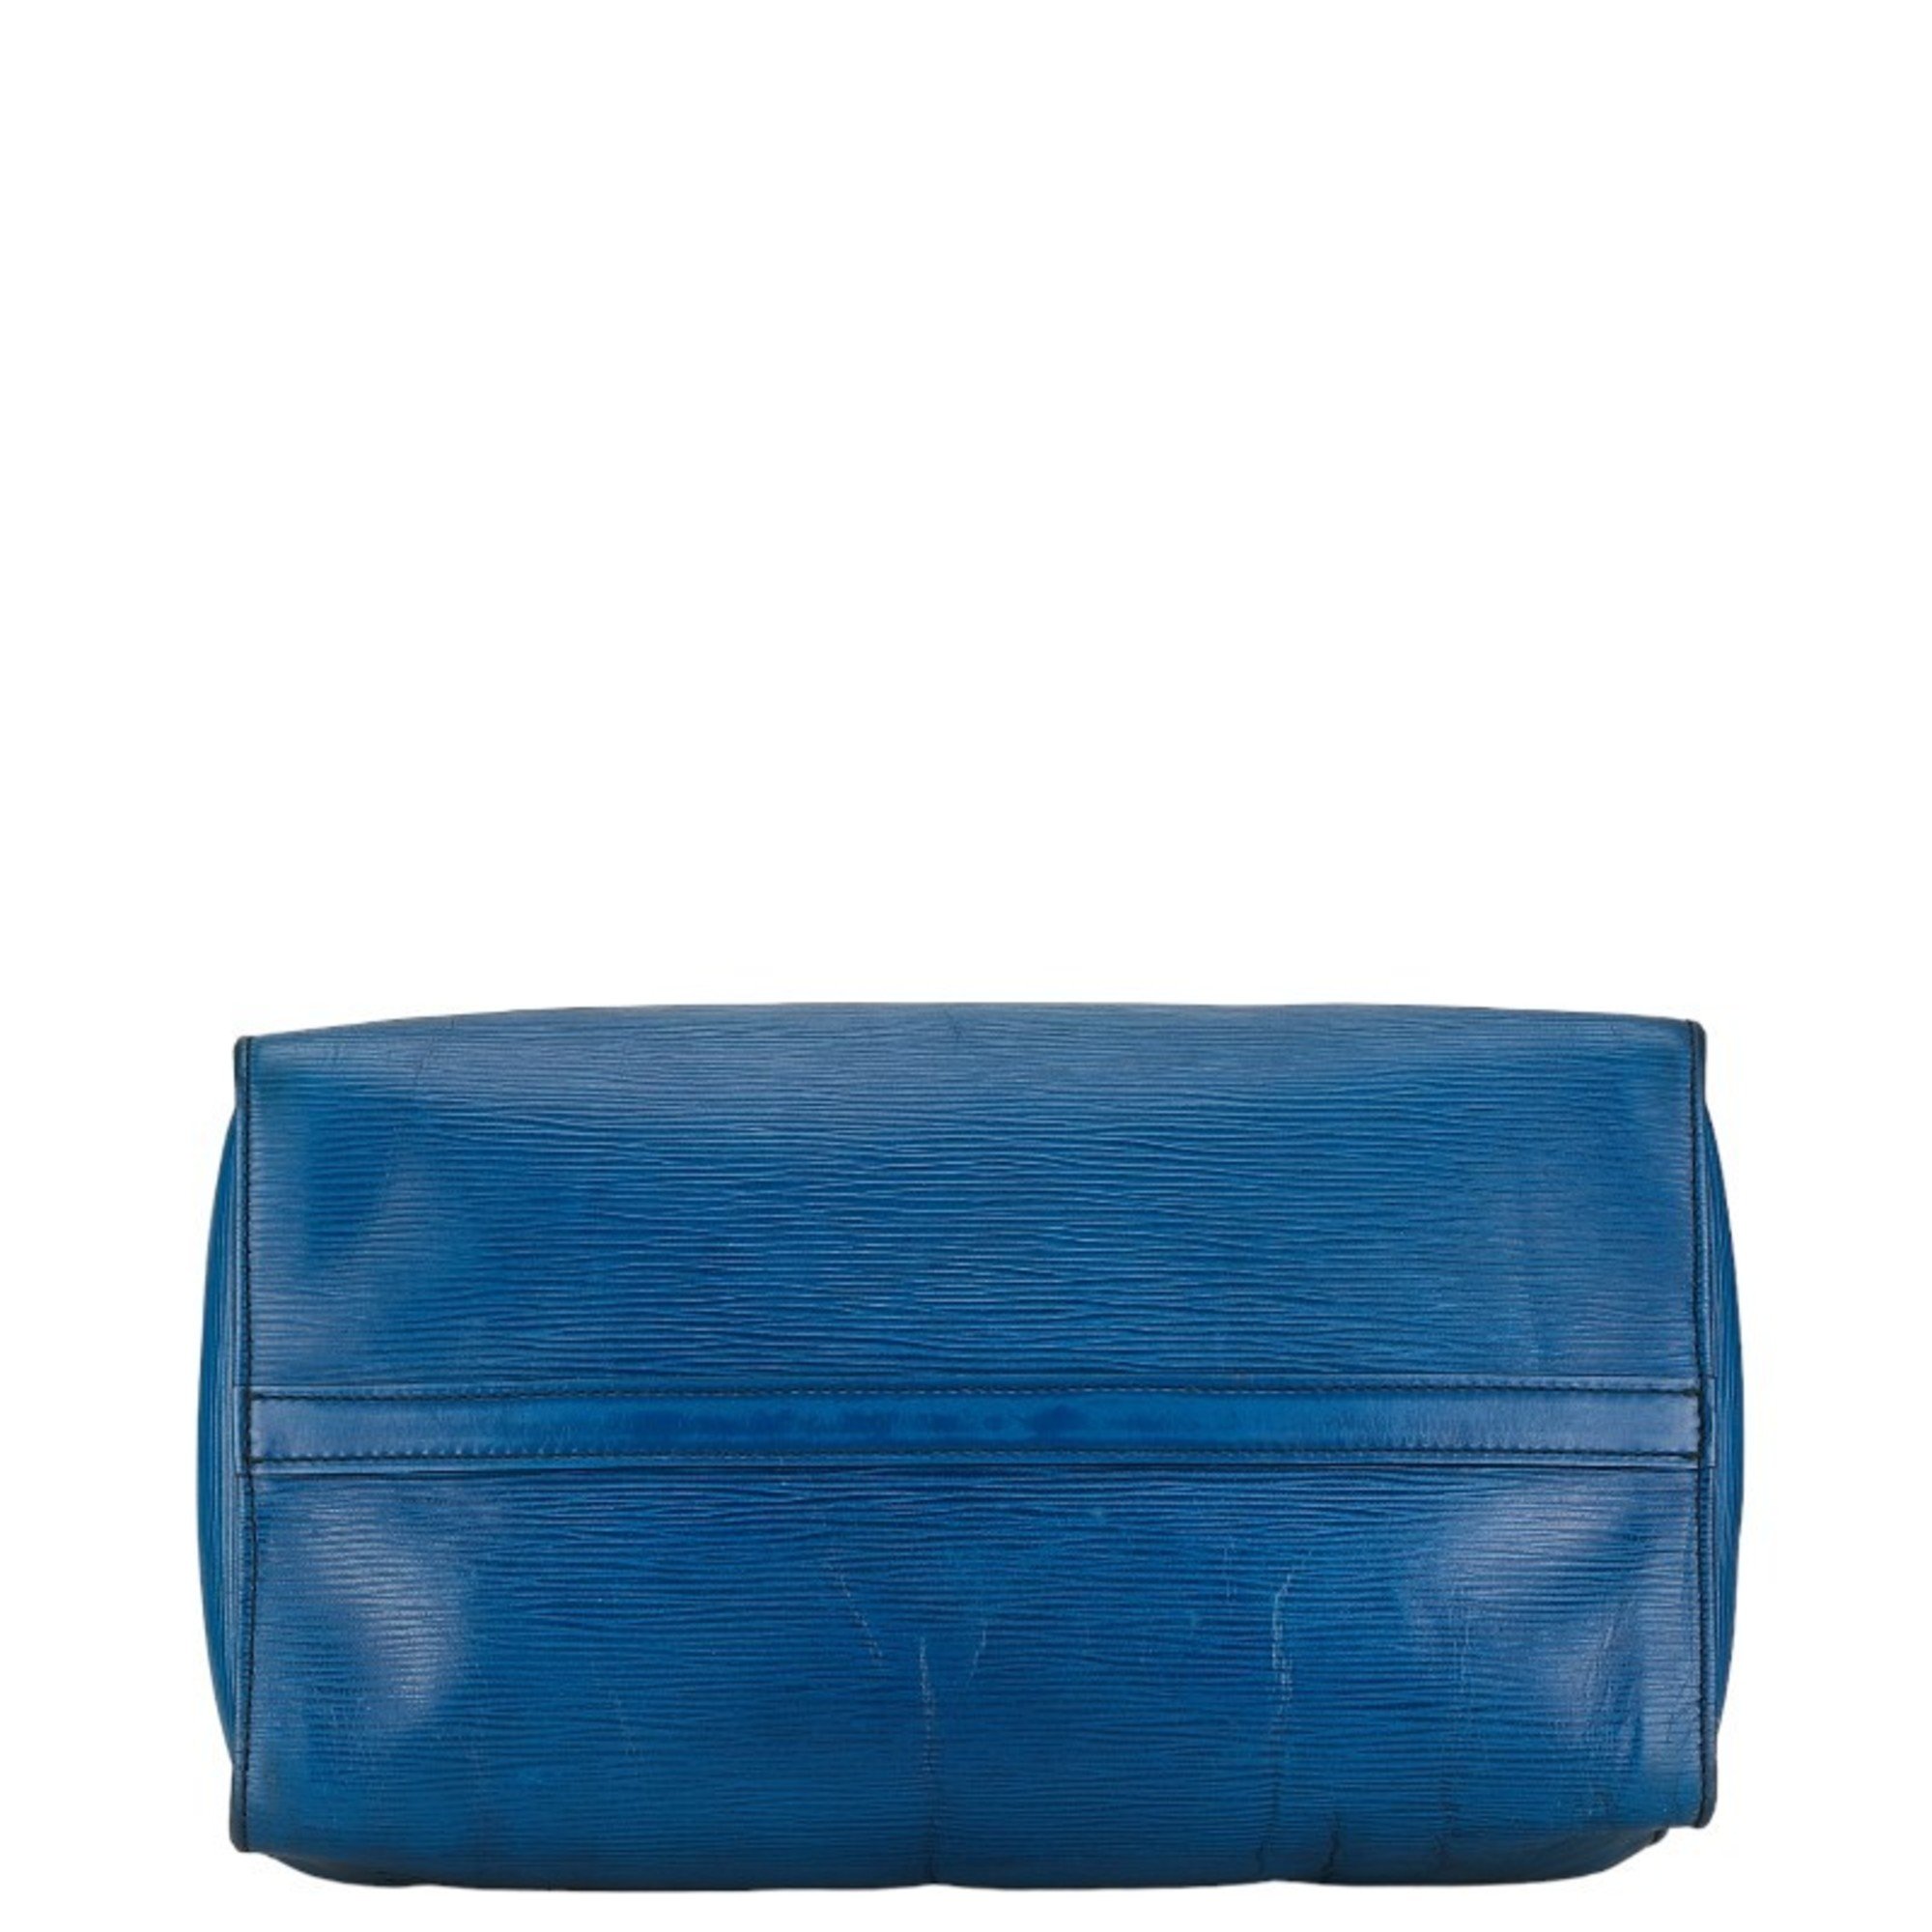 Louis Vuitton Epi Speedy 30 Handbag Boston Bag M43005 Toledo Blue Leather Women's LOUIS VUITTON